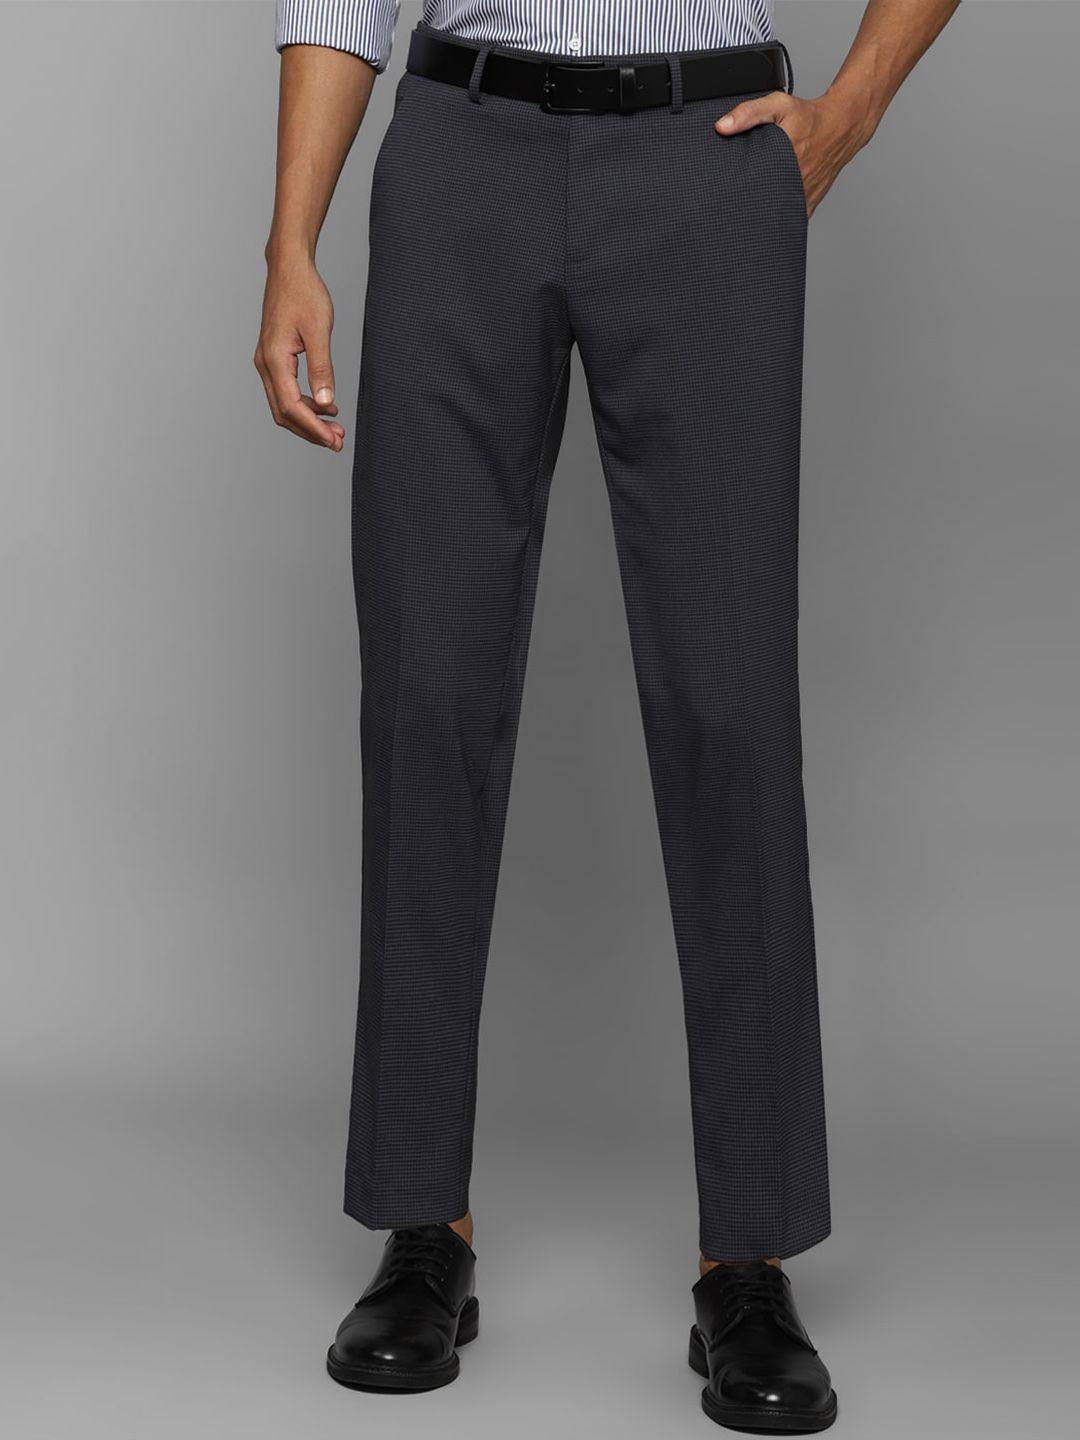 allen-solly-men-mid-rise-slim-fit-formal-trousers